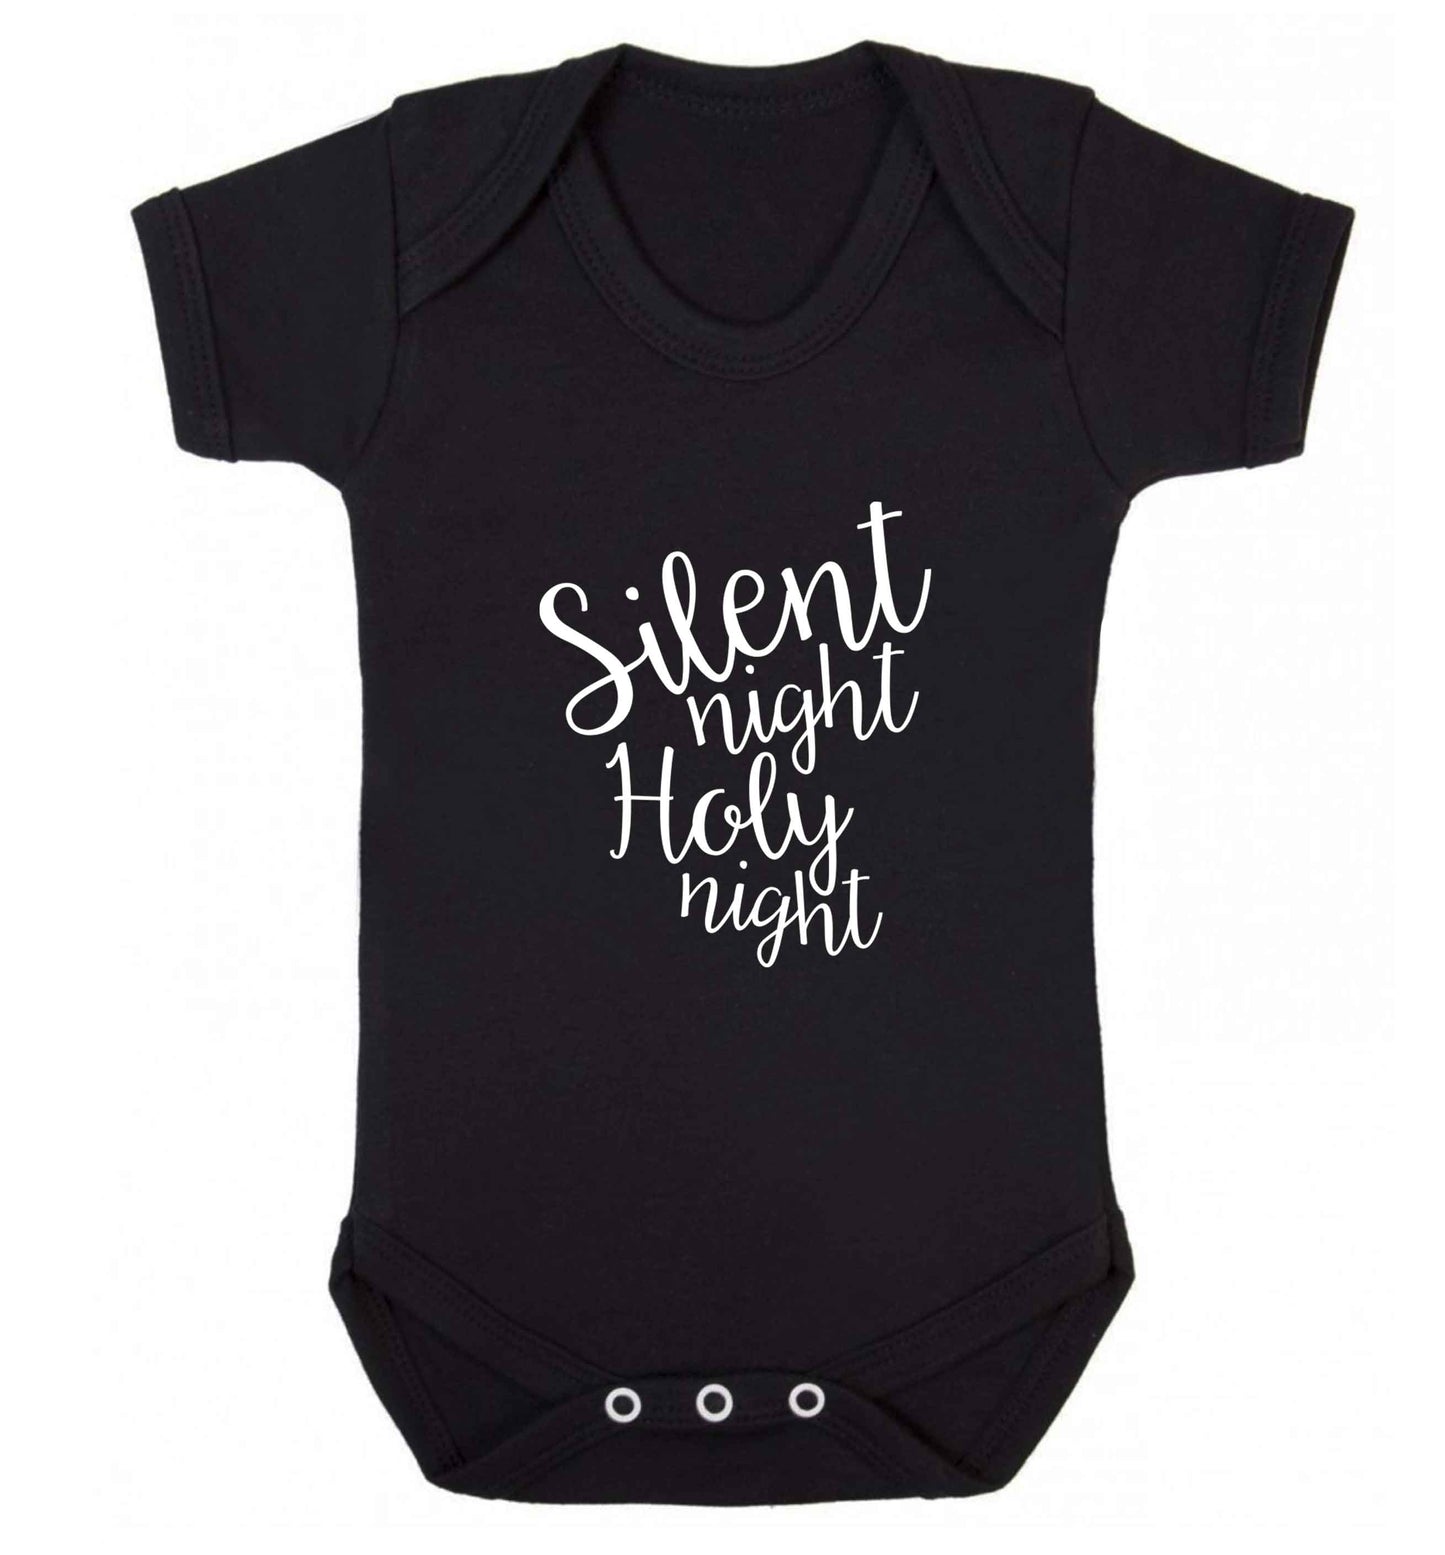 Silent night holy night baby vest black 18-24 months